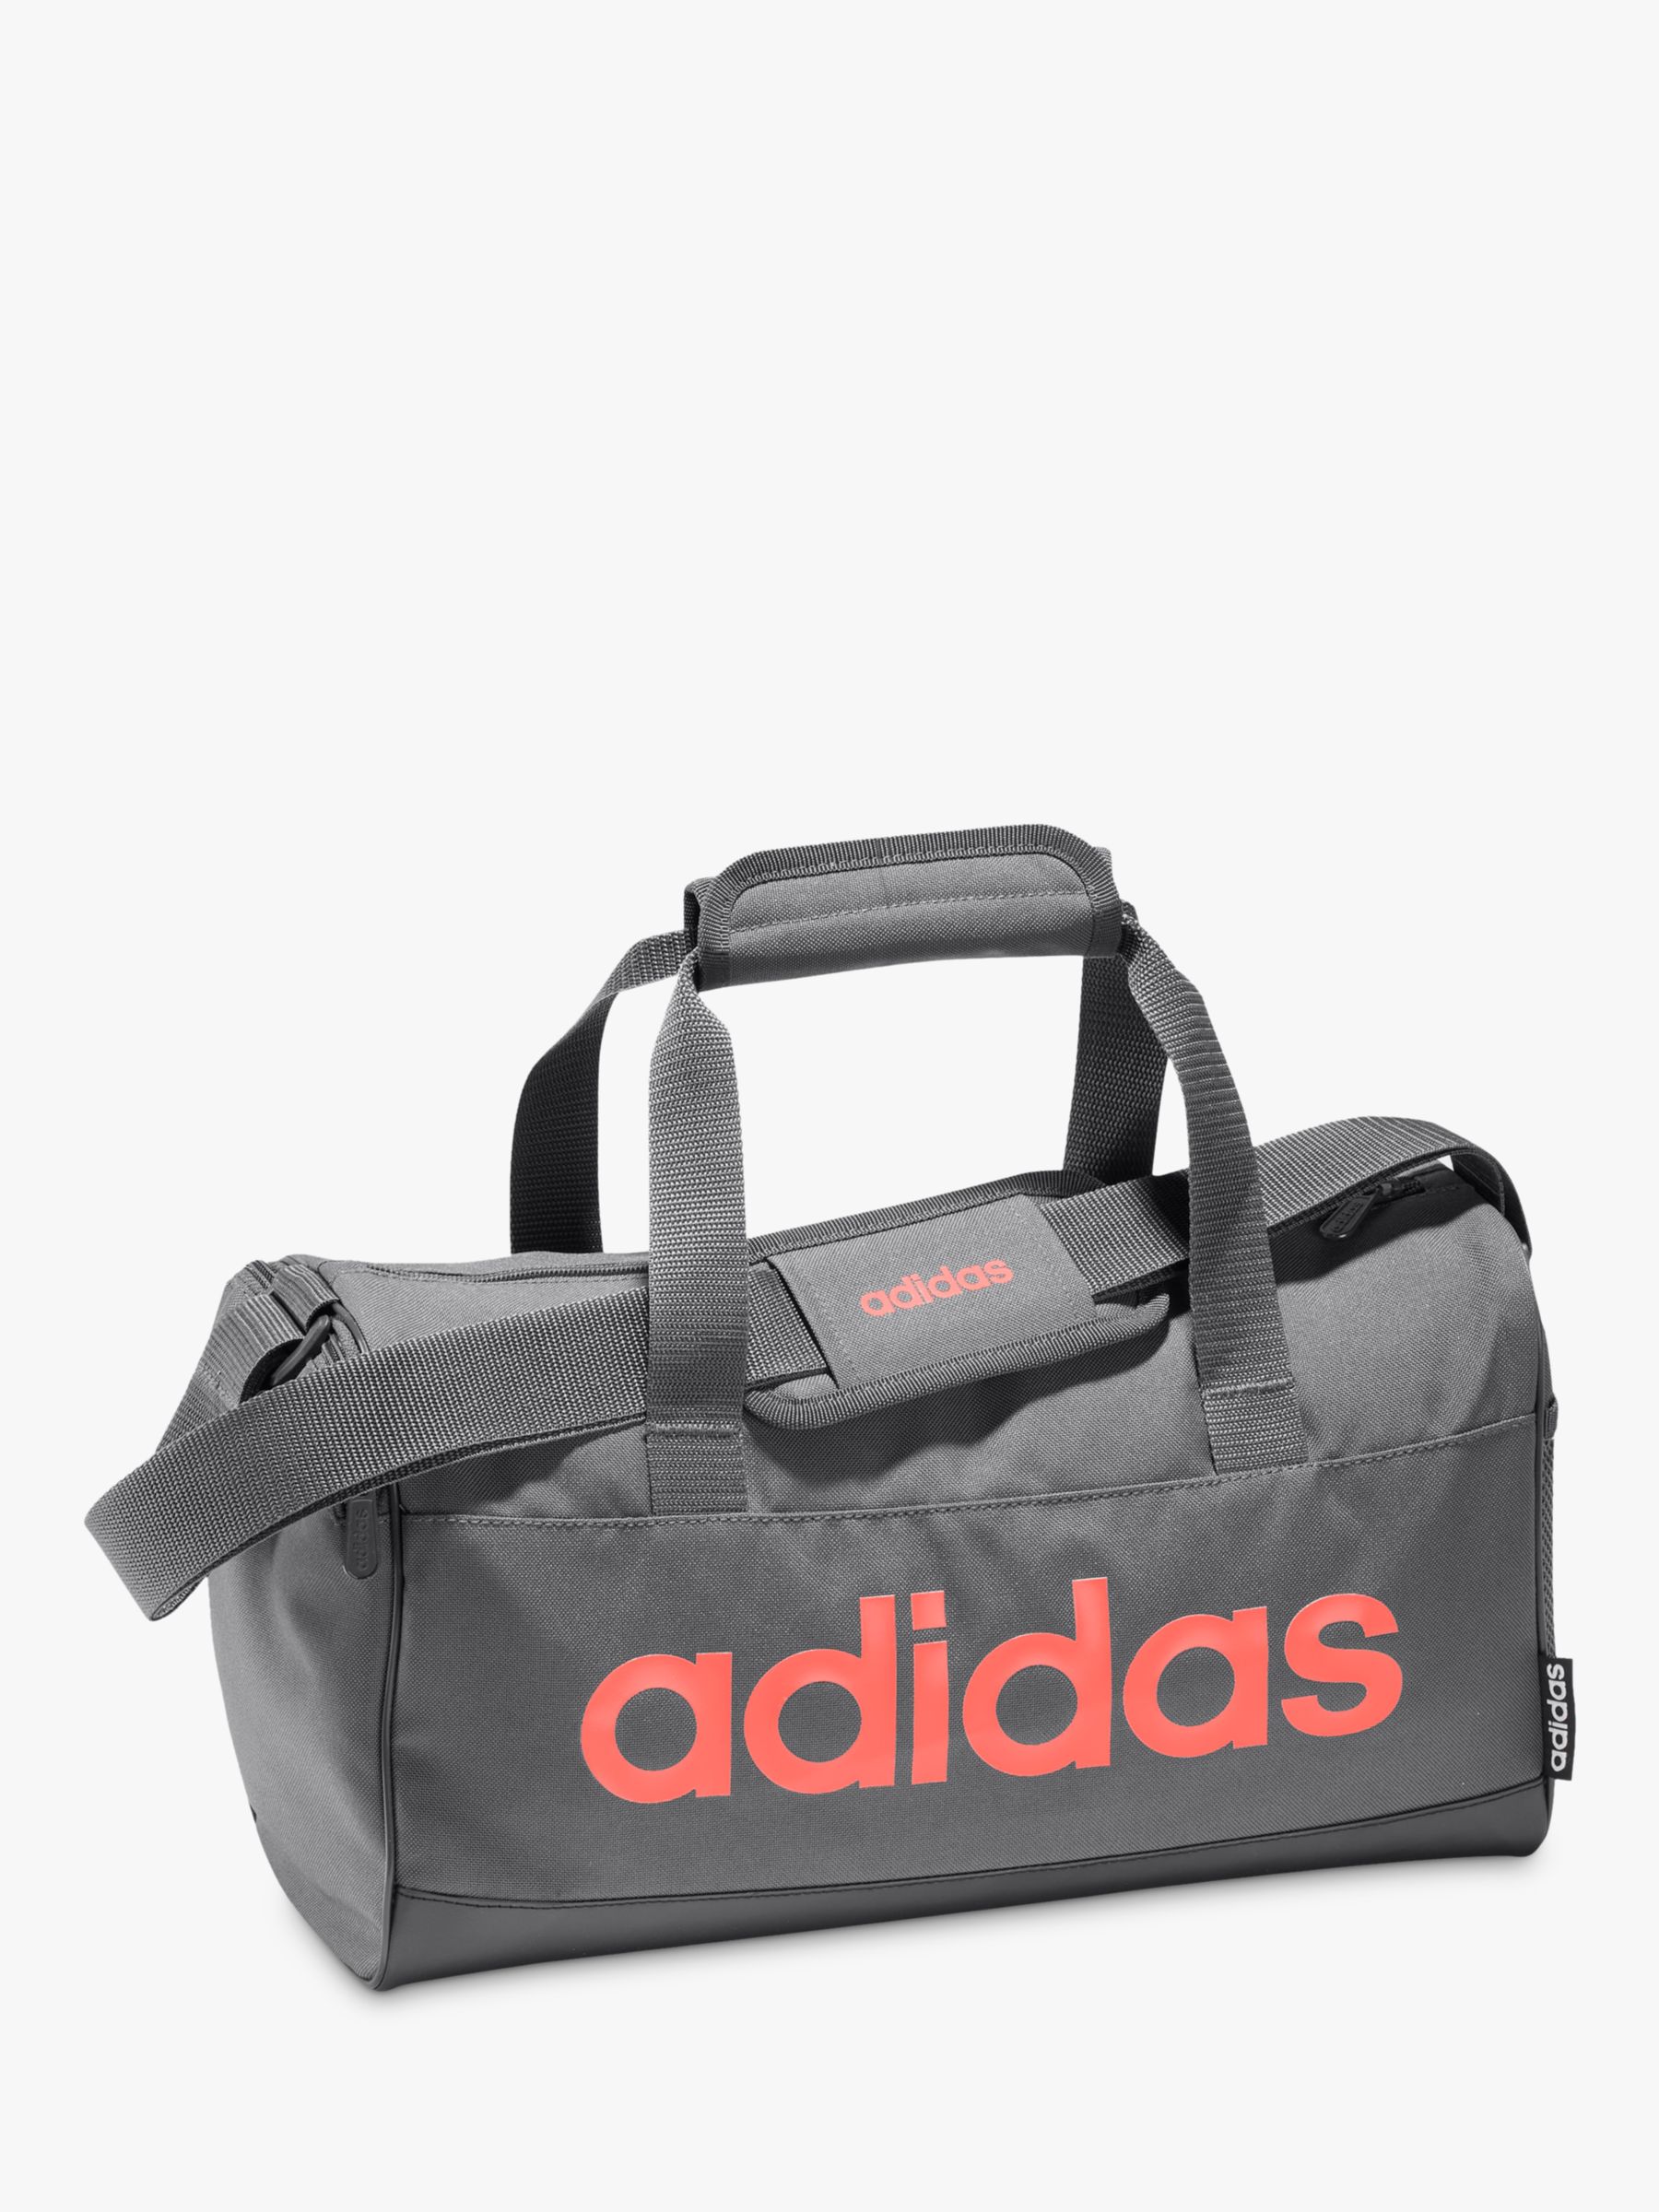 adidas Linear Core Duffel Bag, Extra 